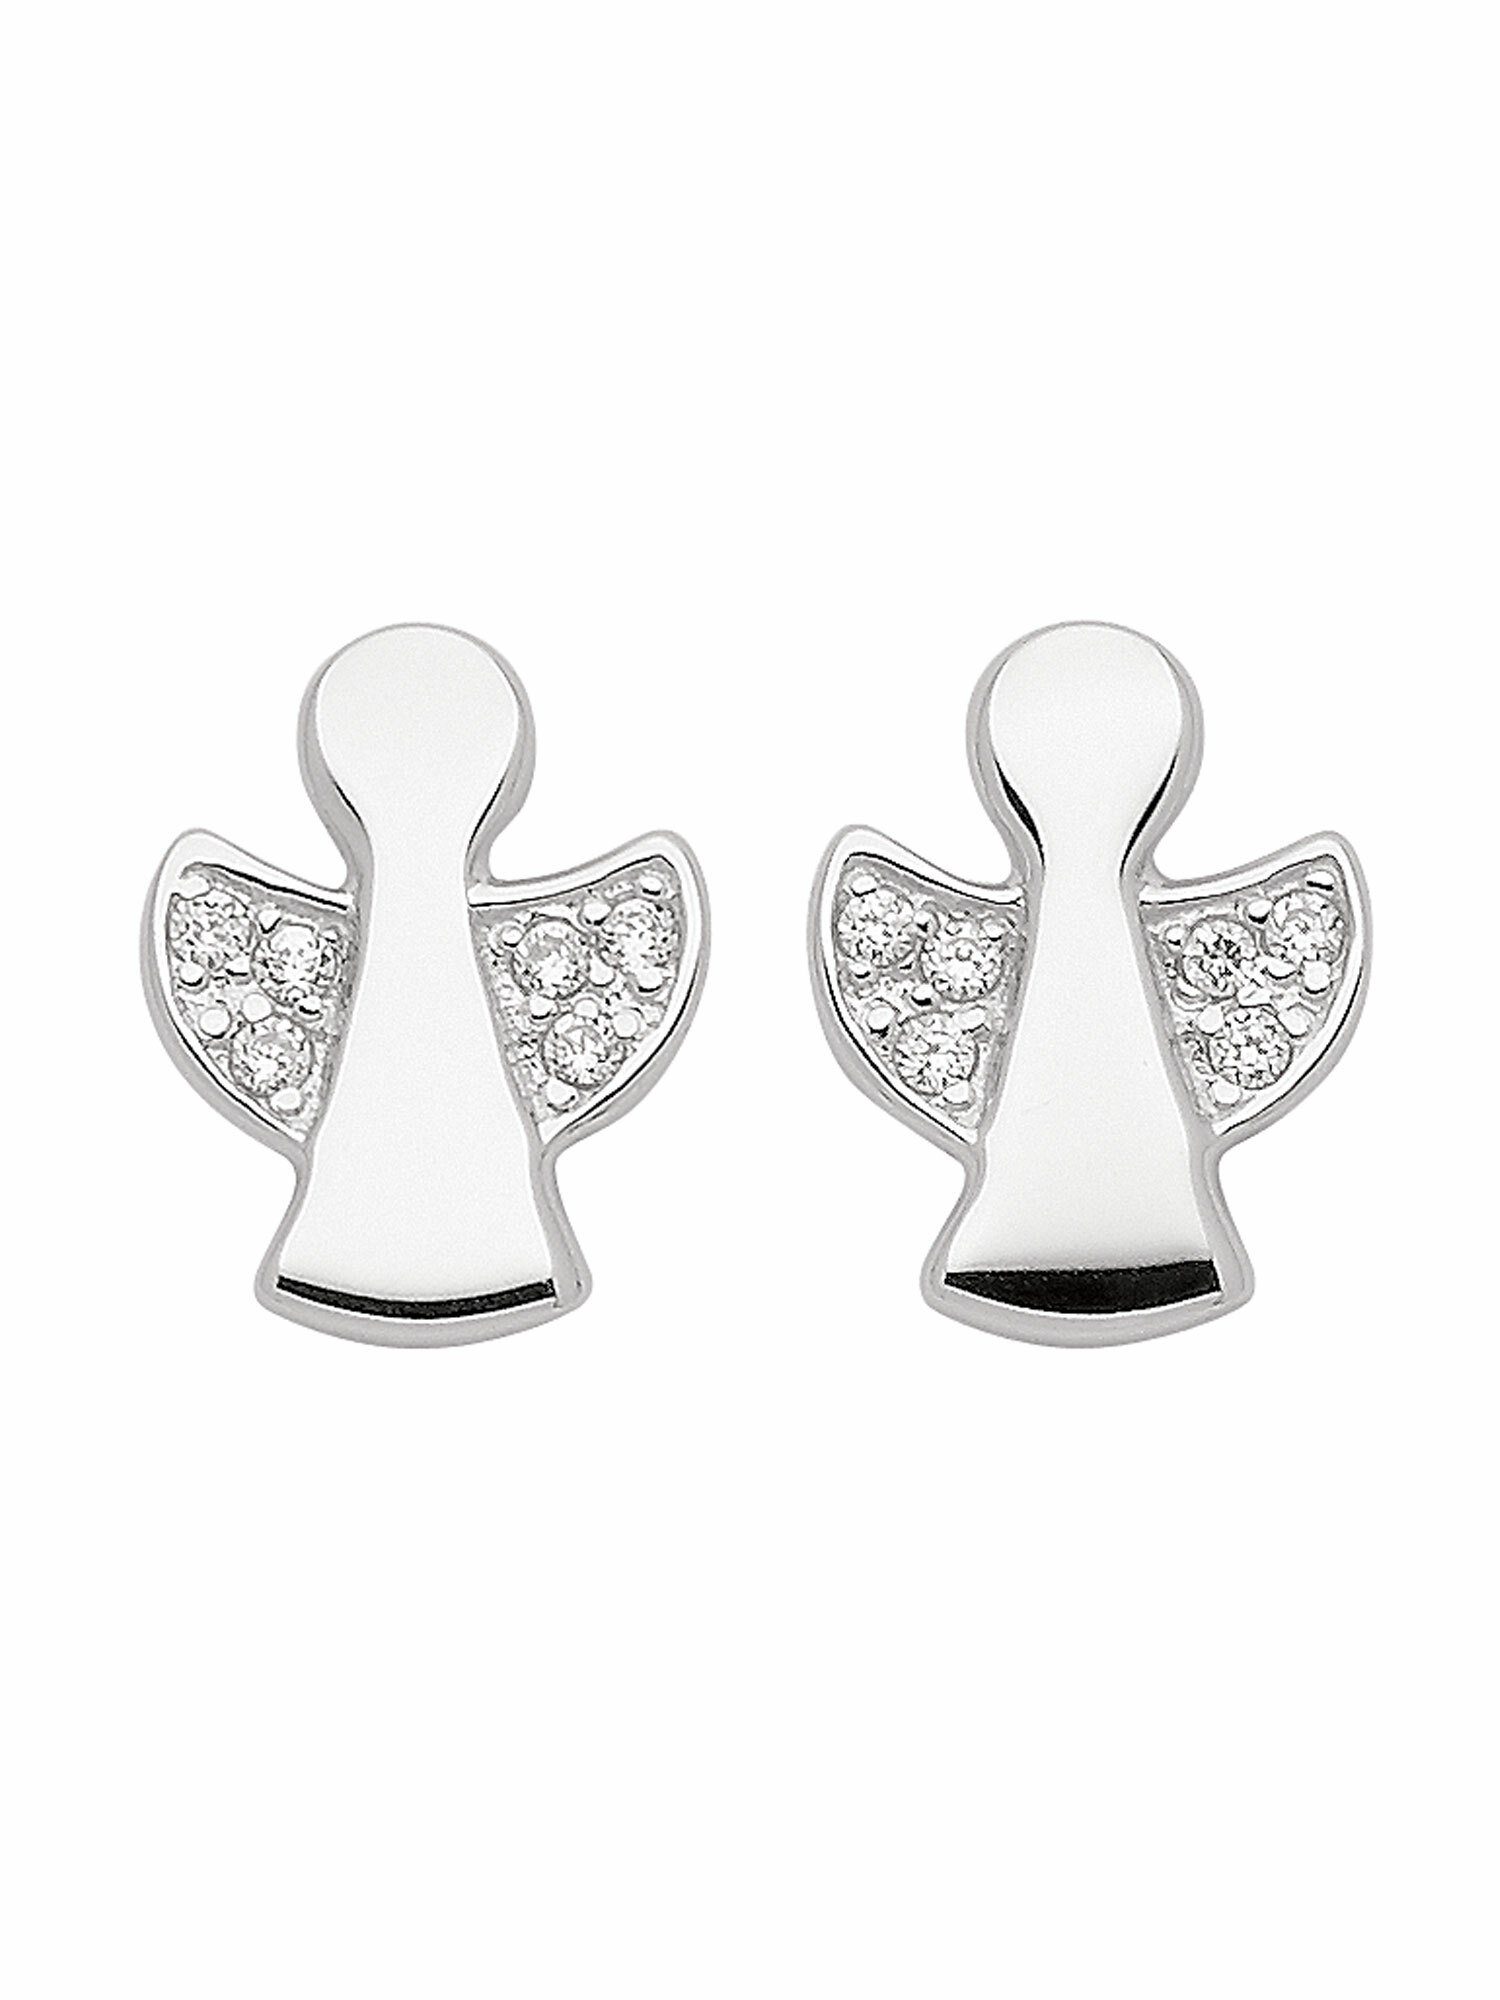 Damen Schmuck Adelia´s Paar Ohrhänger 1 Paar 925 Silber Ohrringe / Ohrstecker mit Zirkonia, 925 Sterling Silber Silberschmuck fü